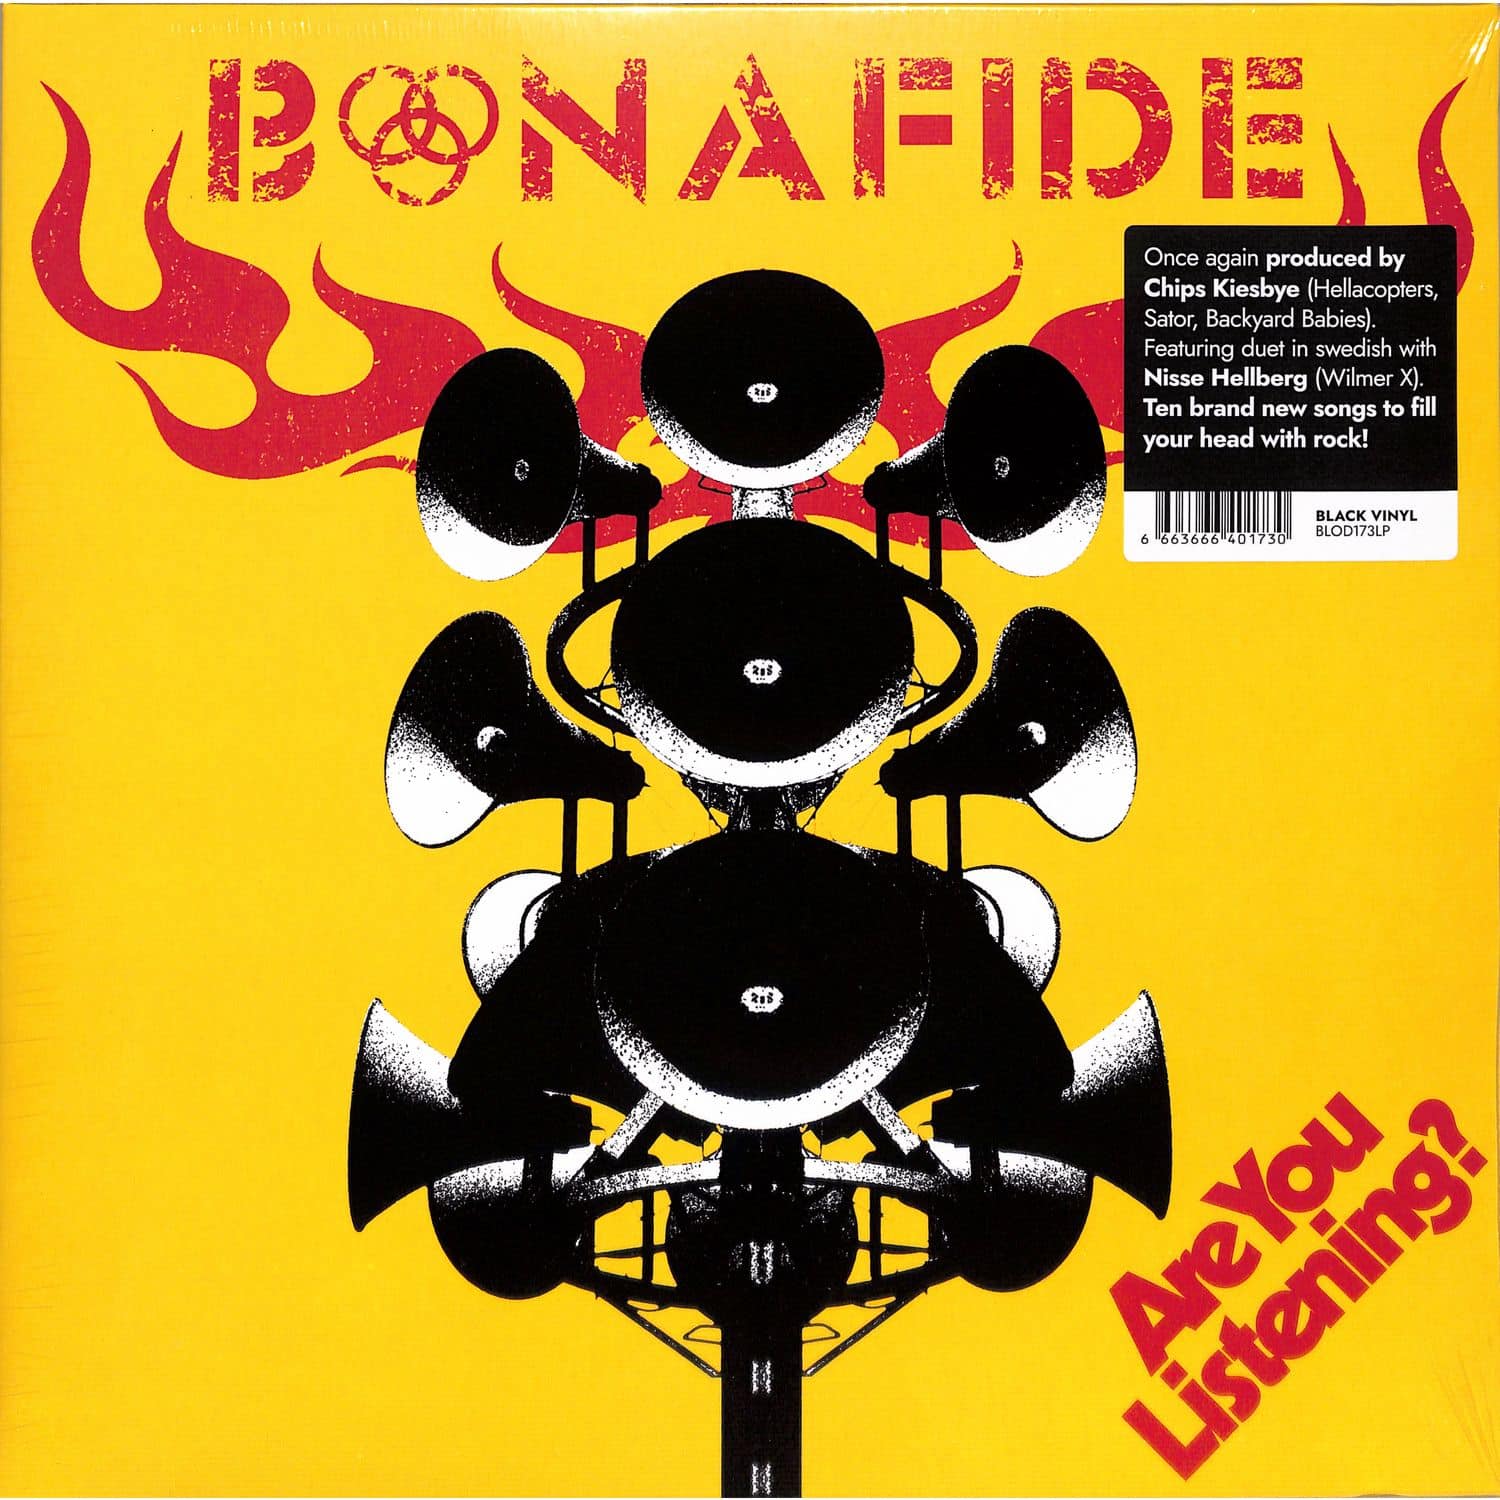 Bonafide - ARE YOU LISTENING? 